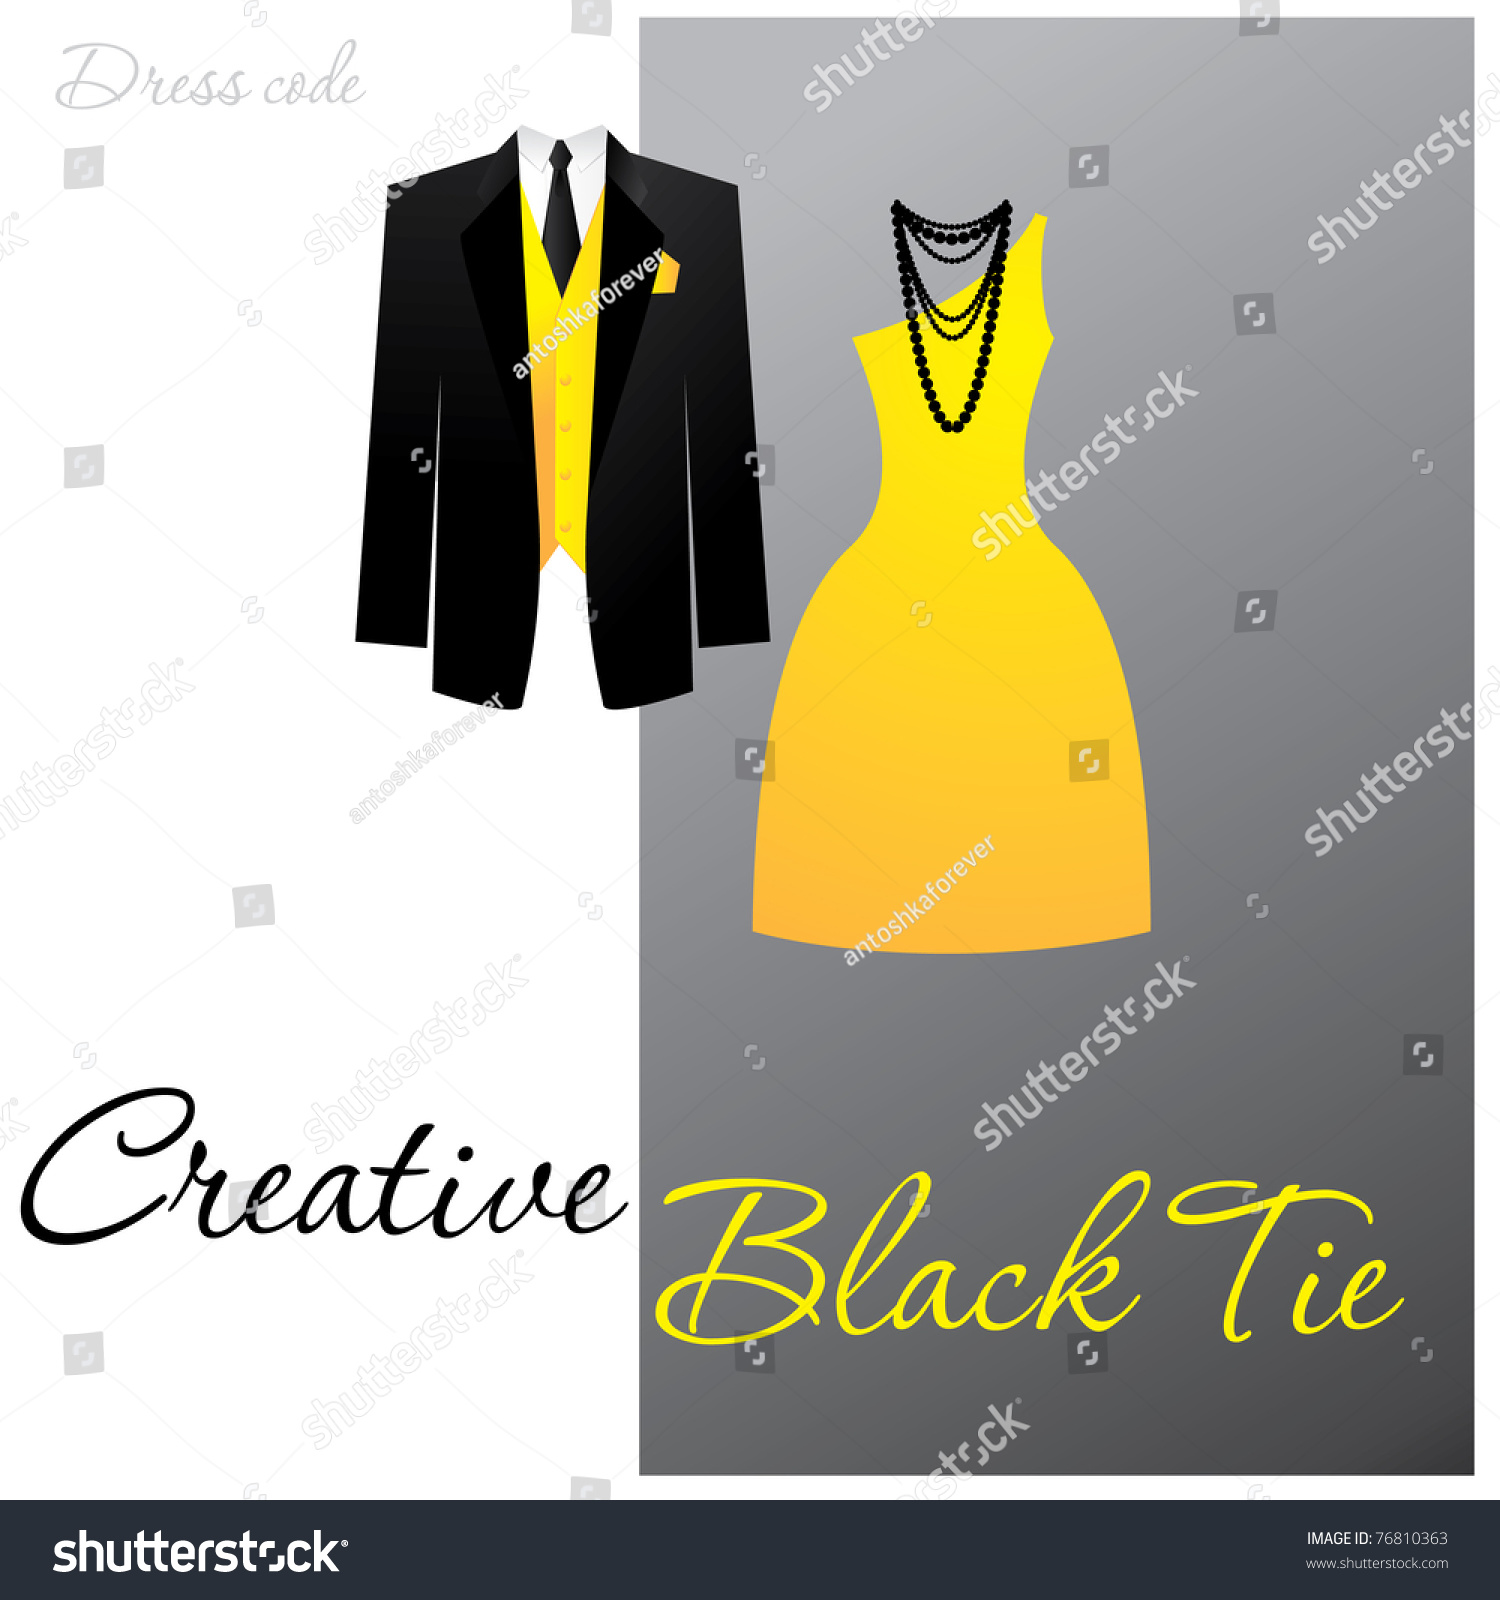 creative black tie dress code male